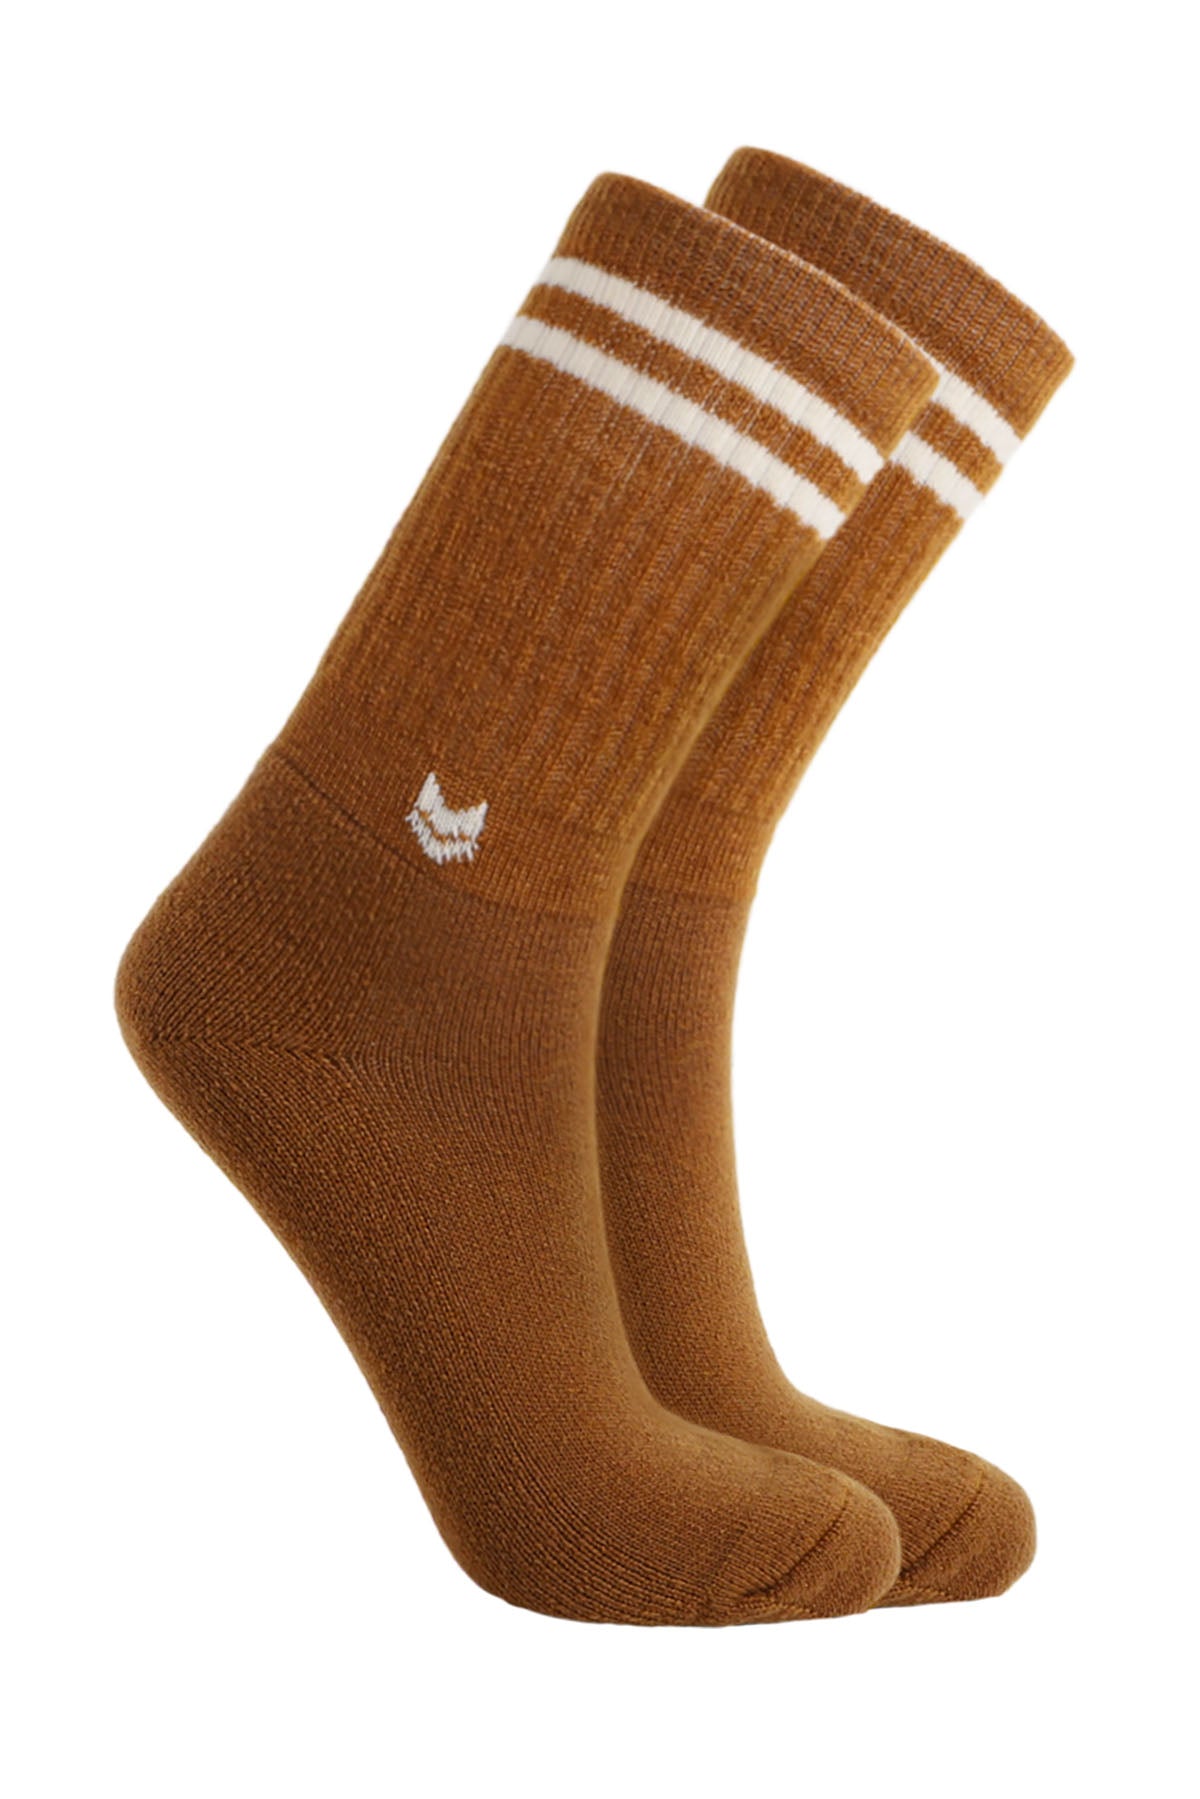 Merino Wool Crew Socks - VAI-KOSocks